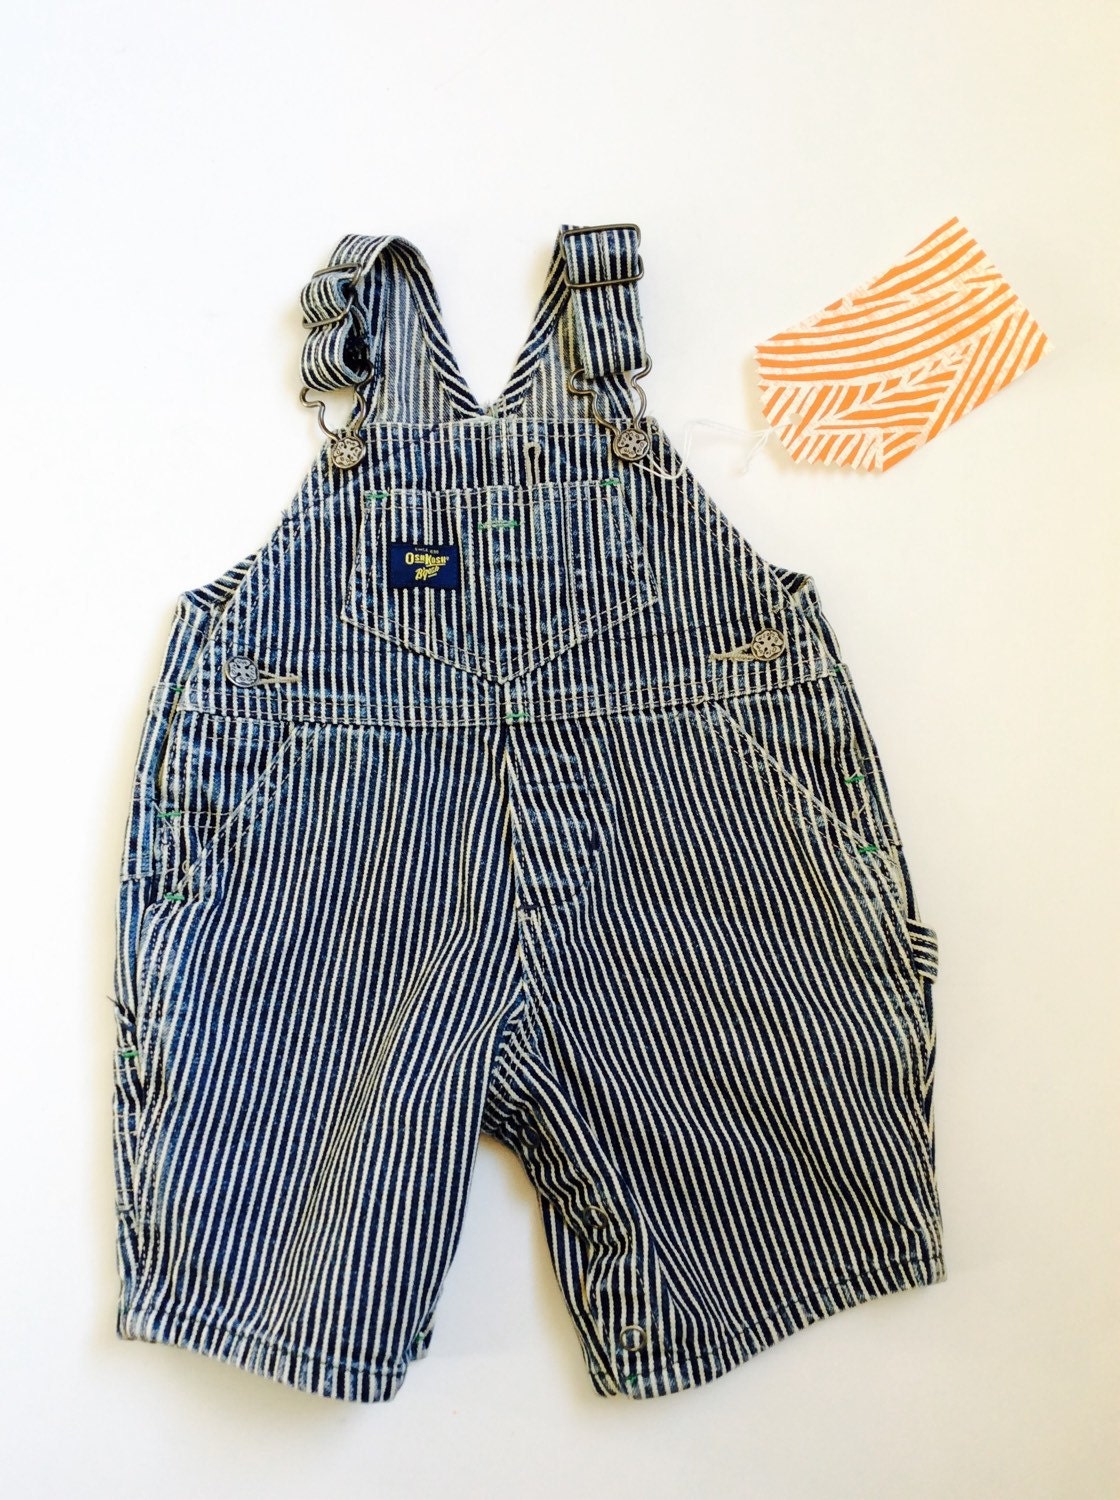 Vintage oshkosh overalls railroad stripe overalls newborn